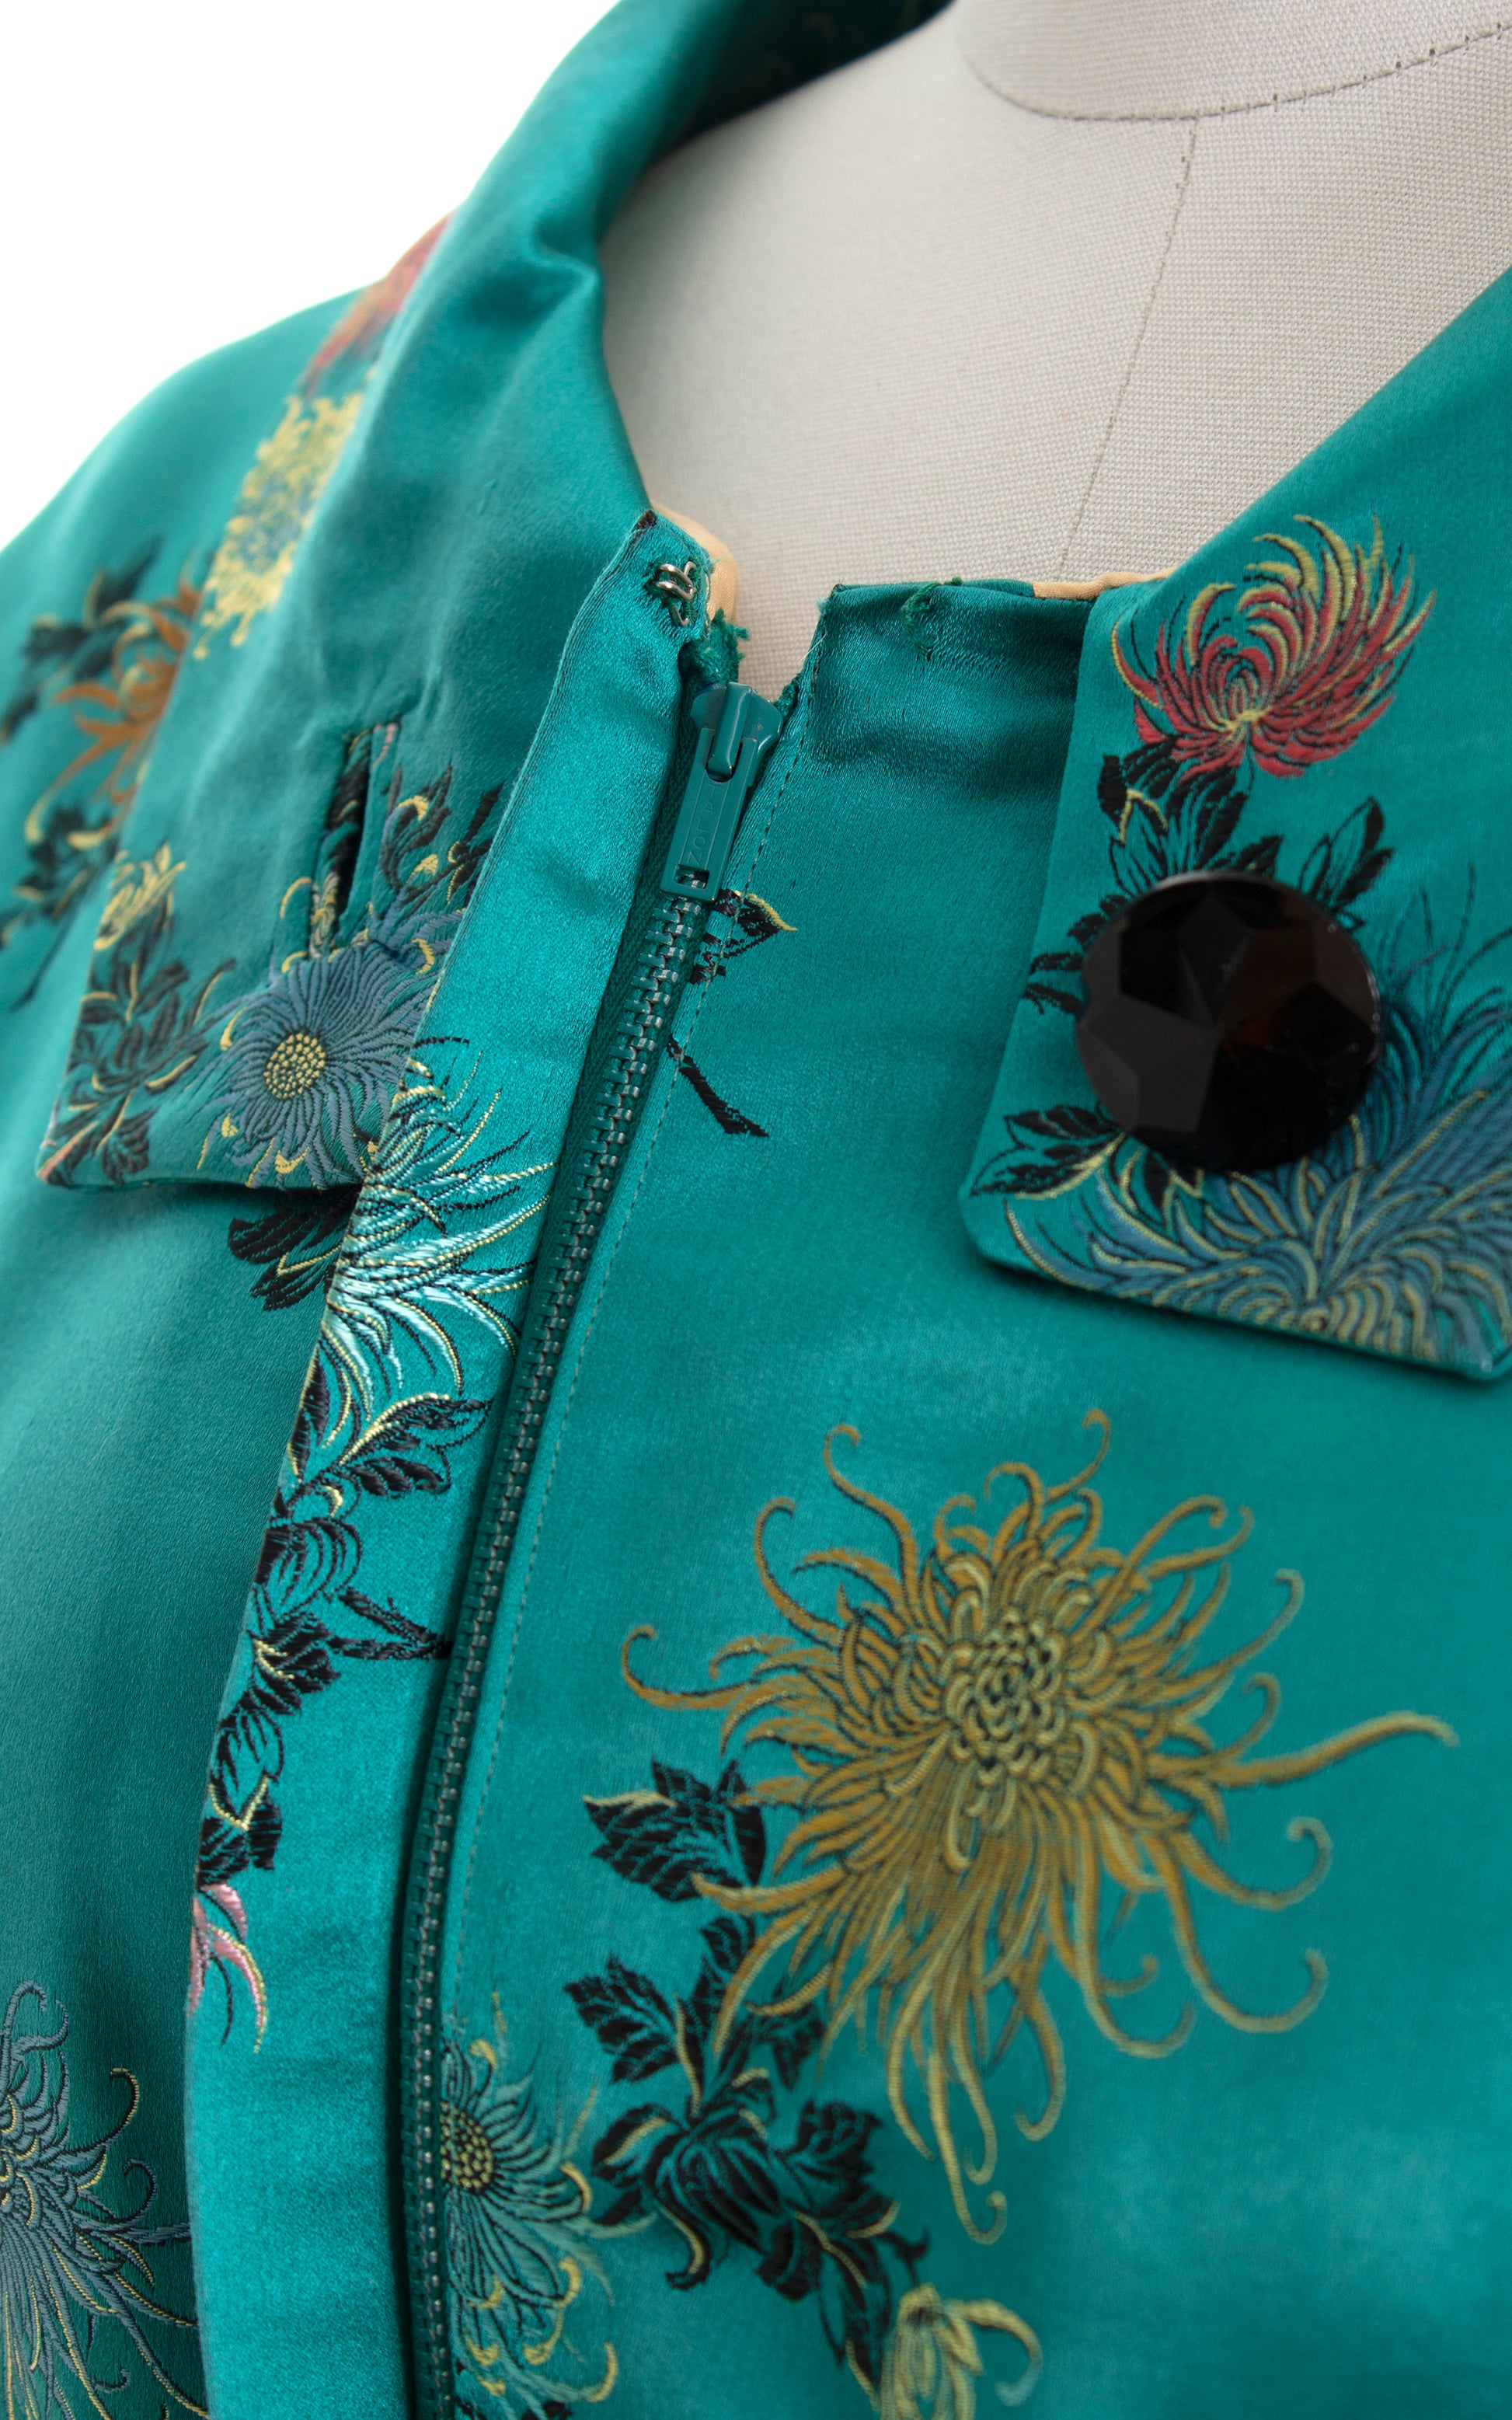 Vintage 1960s 60s Asian Silk Floral Jacquard Green Evening Dress Birthday Life Vintage